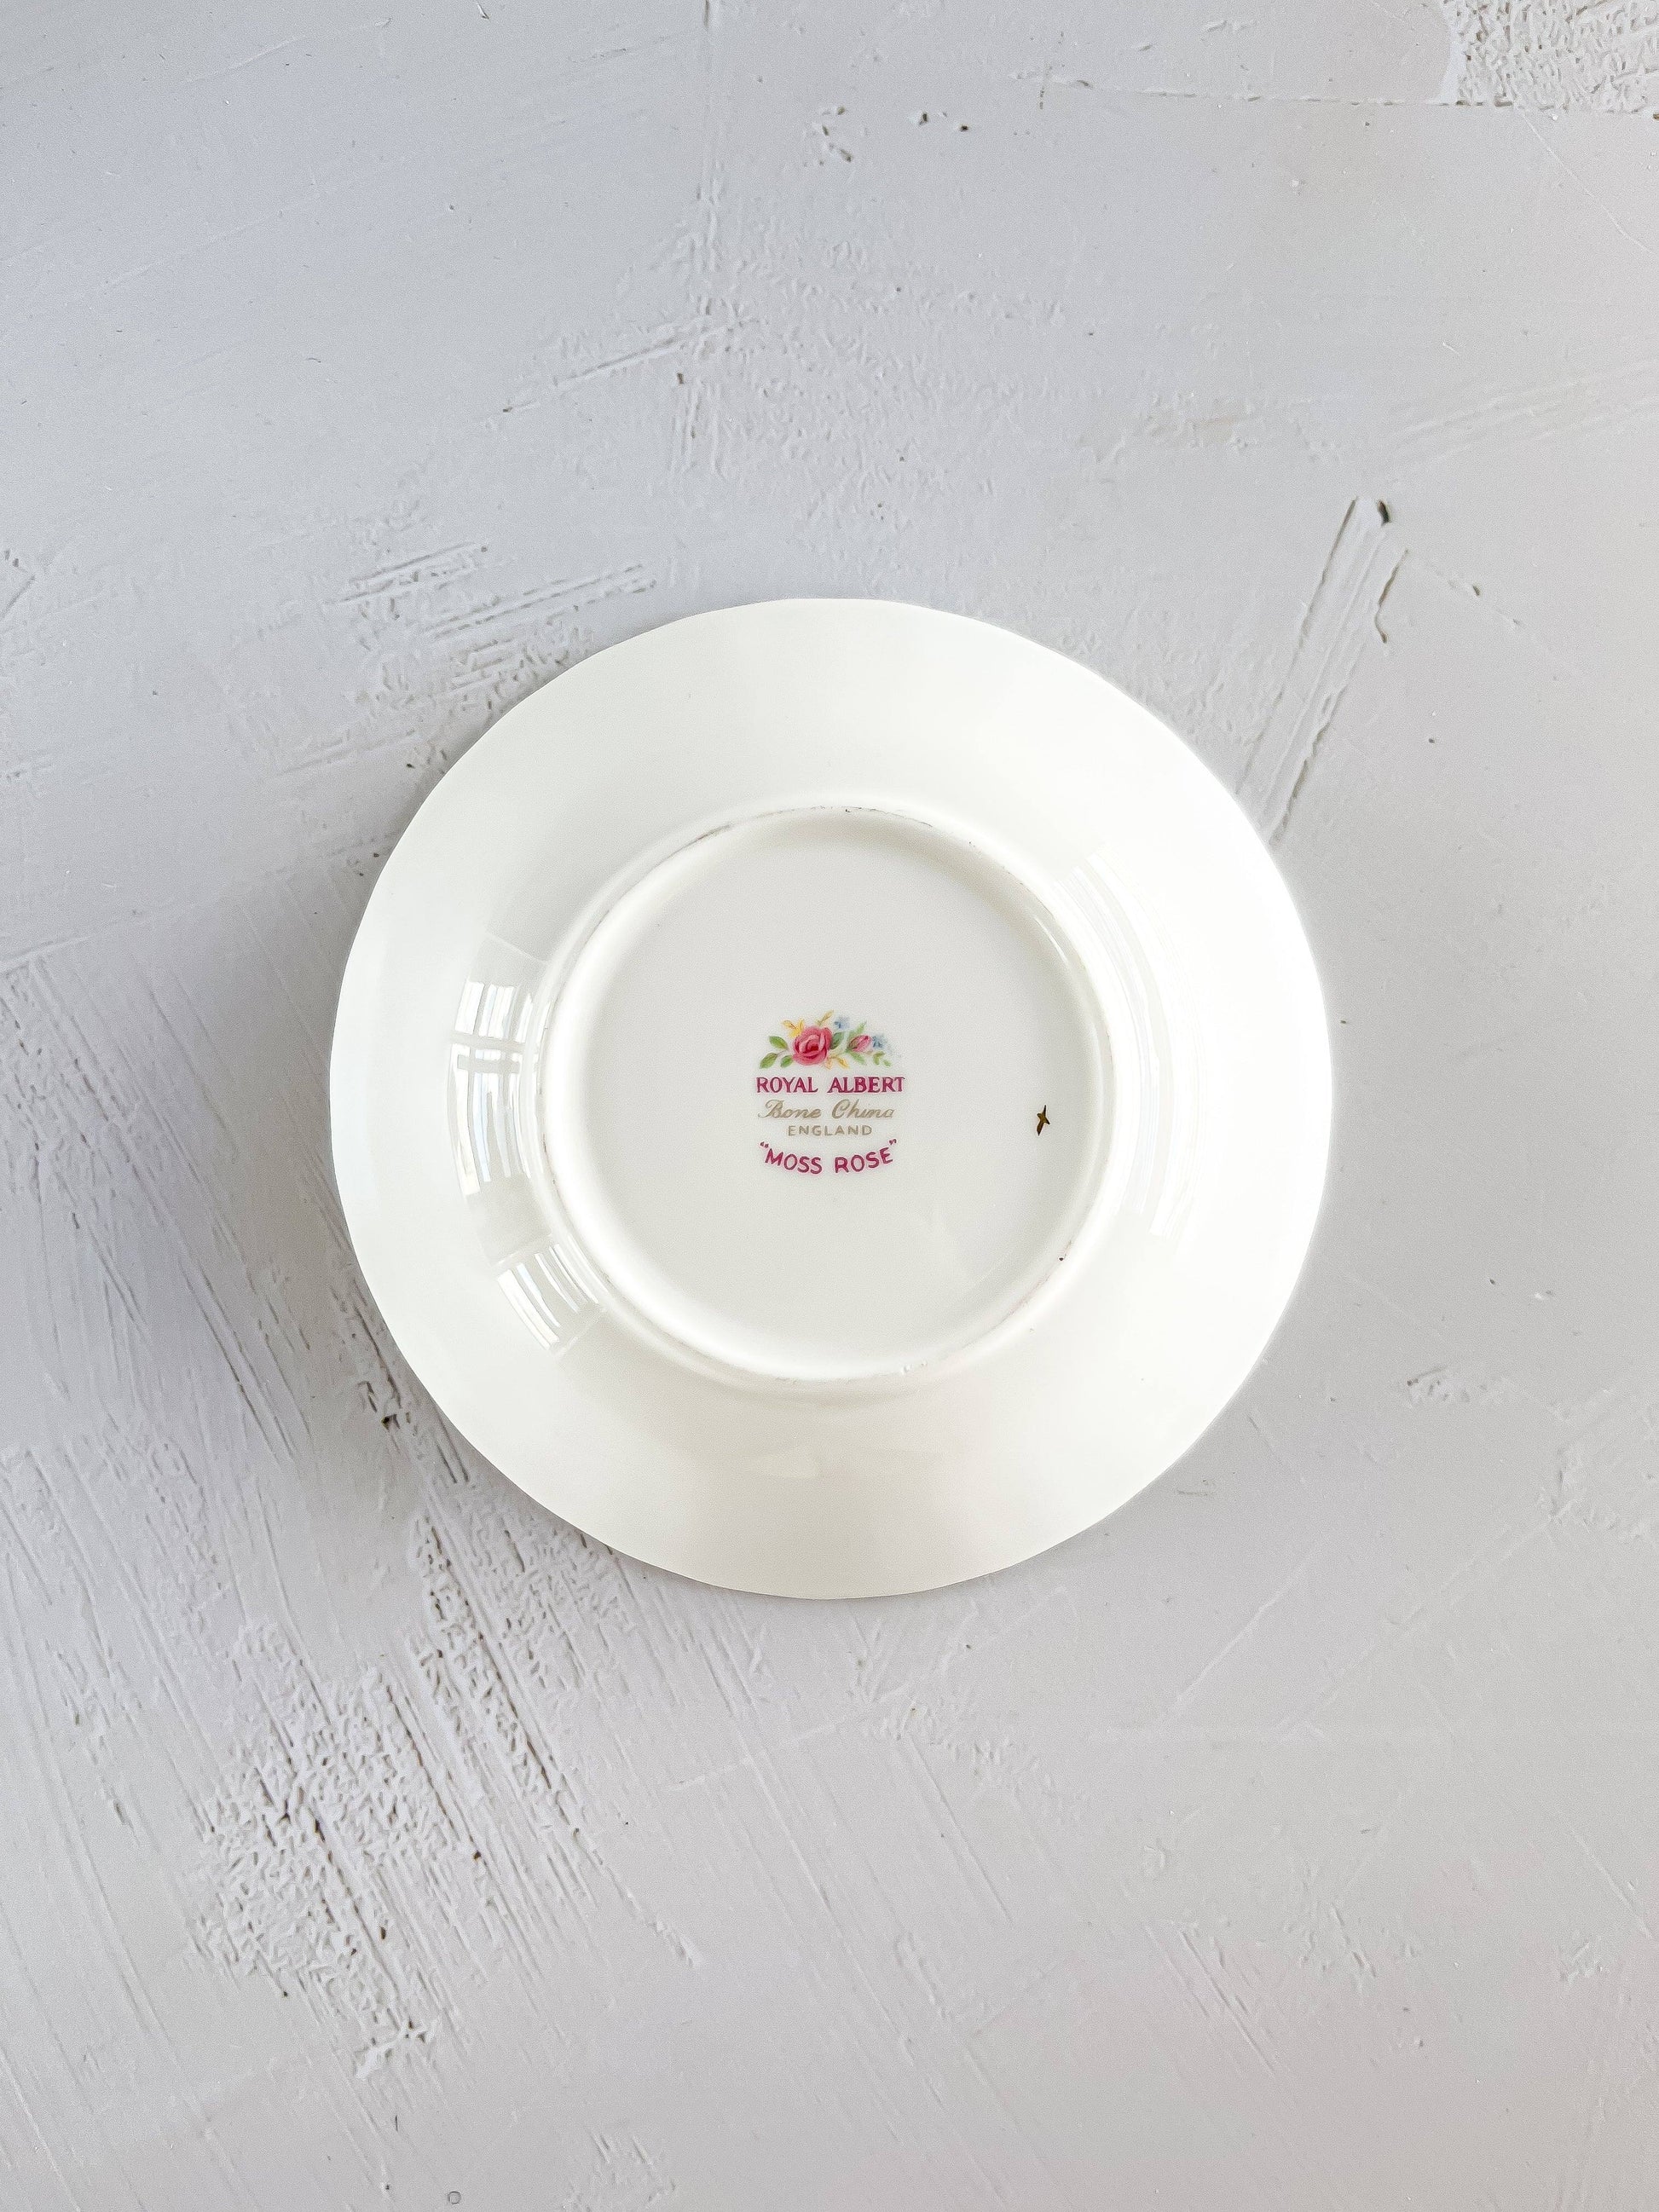 Royal Albert Dessert/Fruit Bowl - Blooming Elegance - 'Moss Rose' Collection - SOSC Home